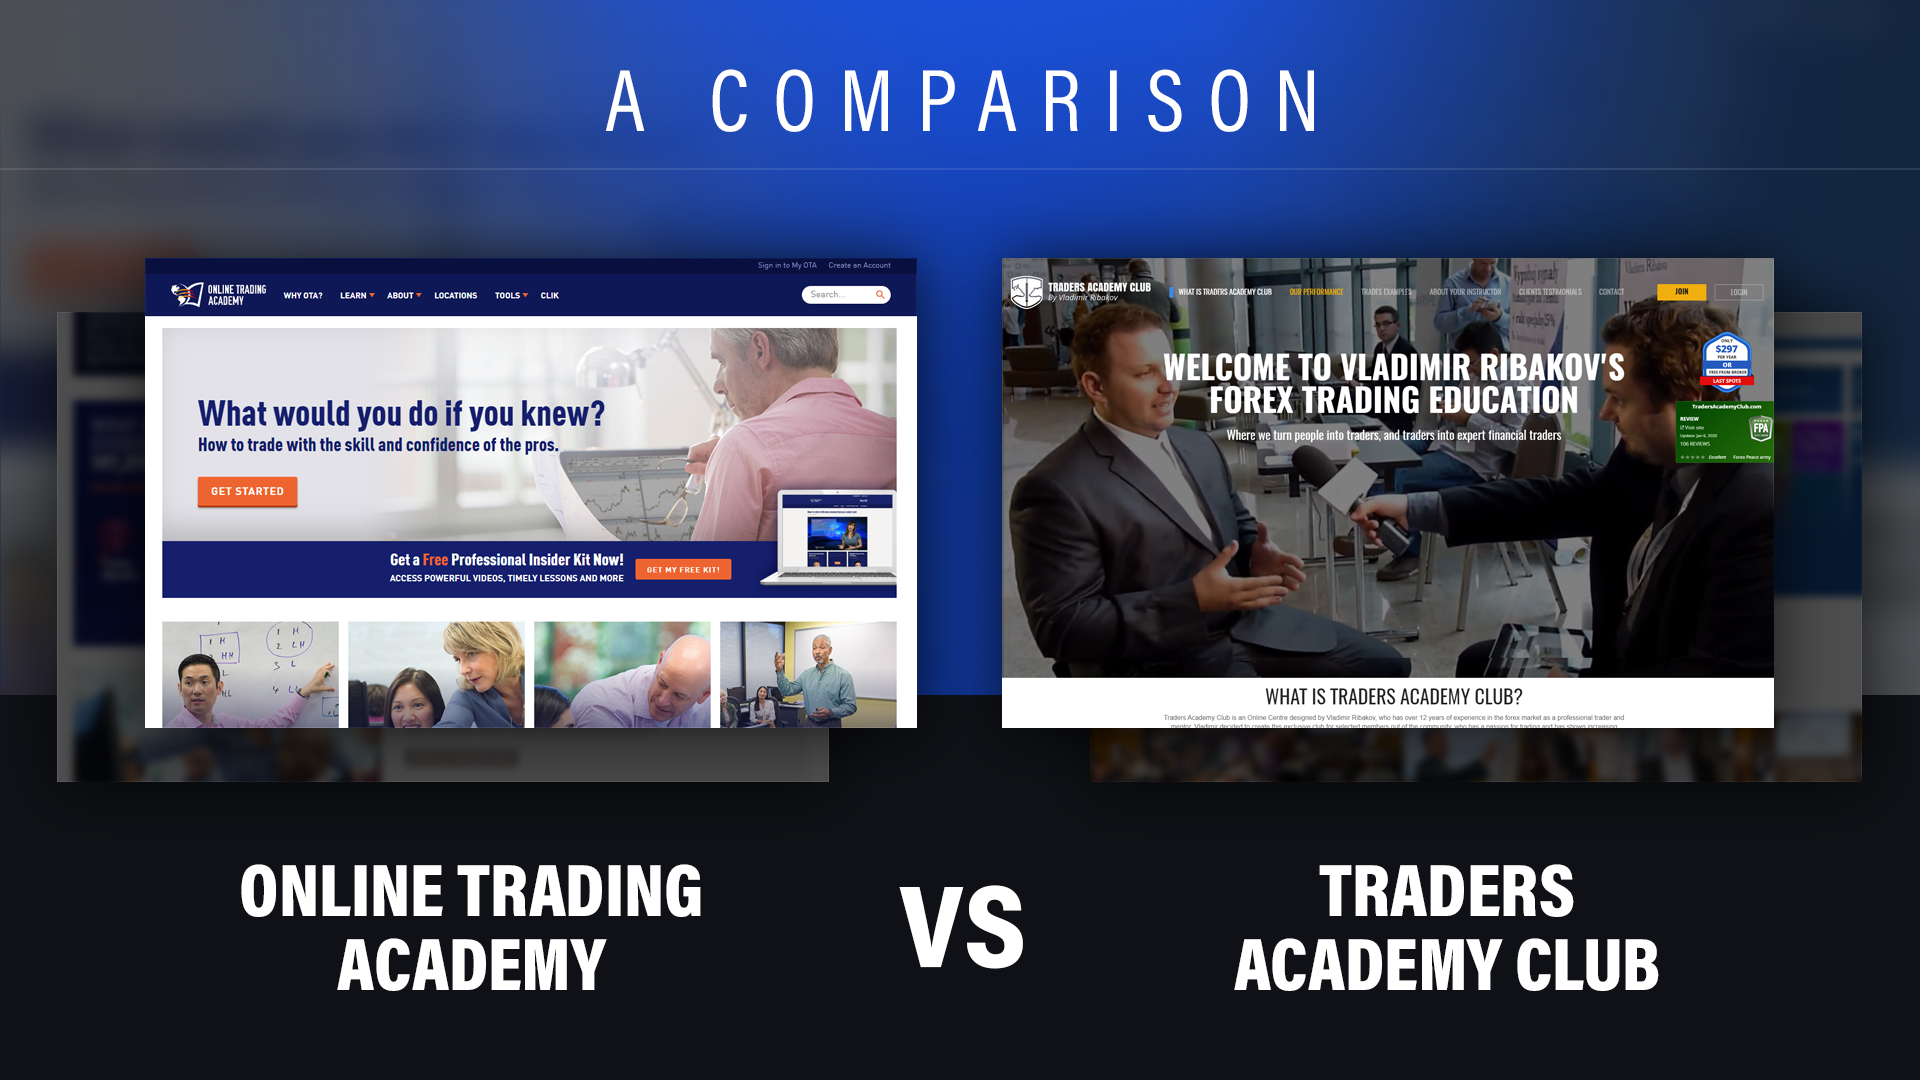 Option trading academy